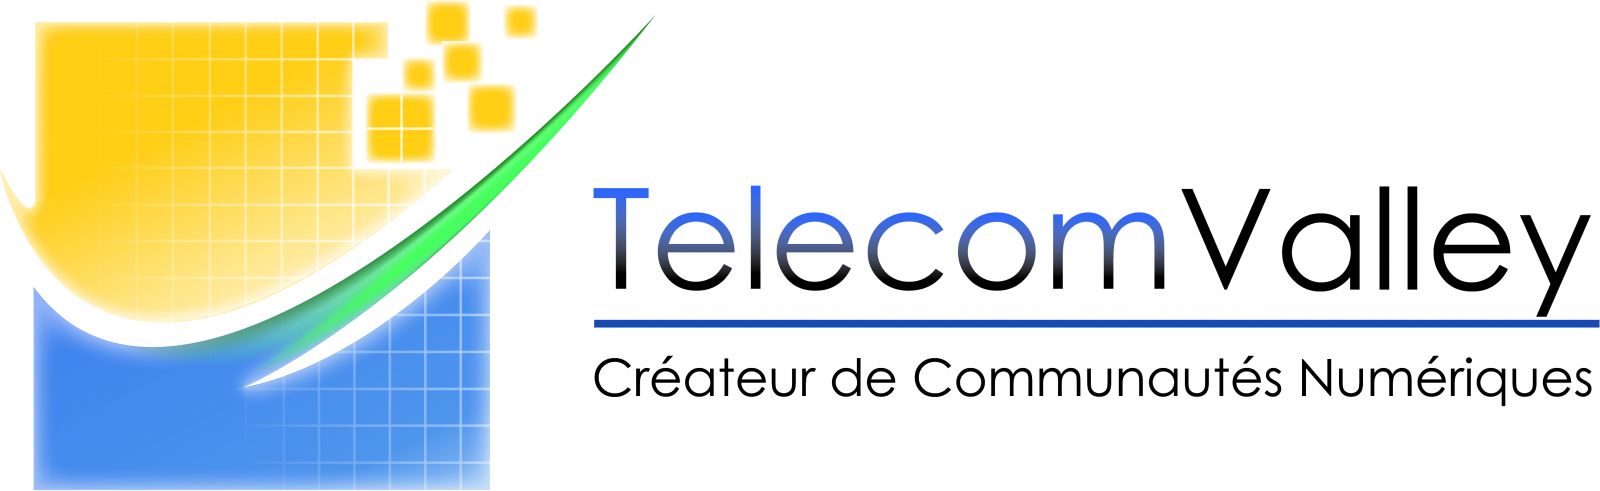 telecom_fr HD 2013